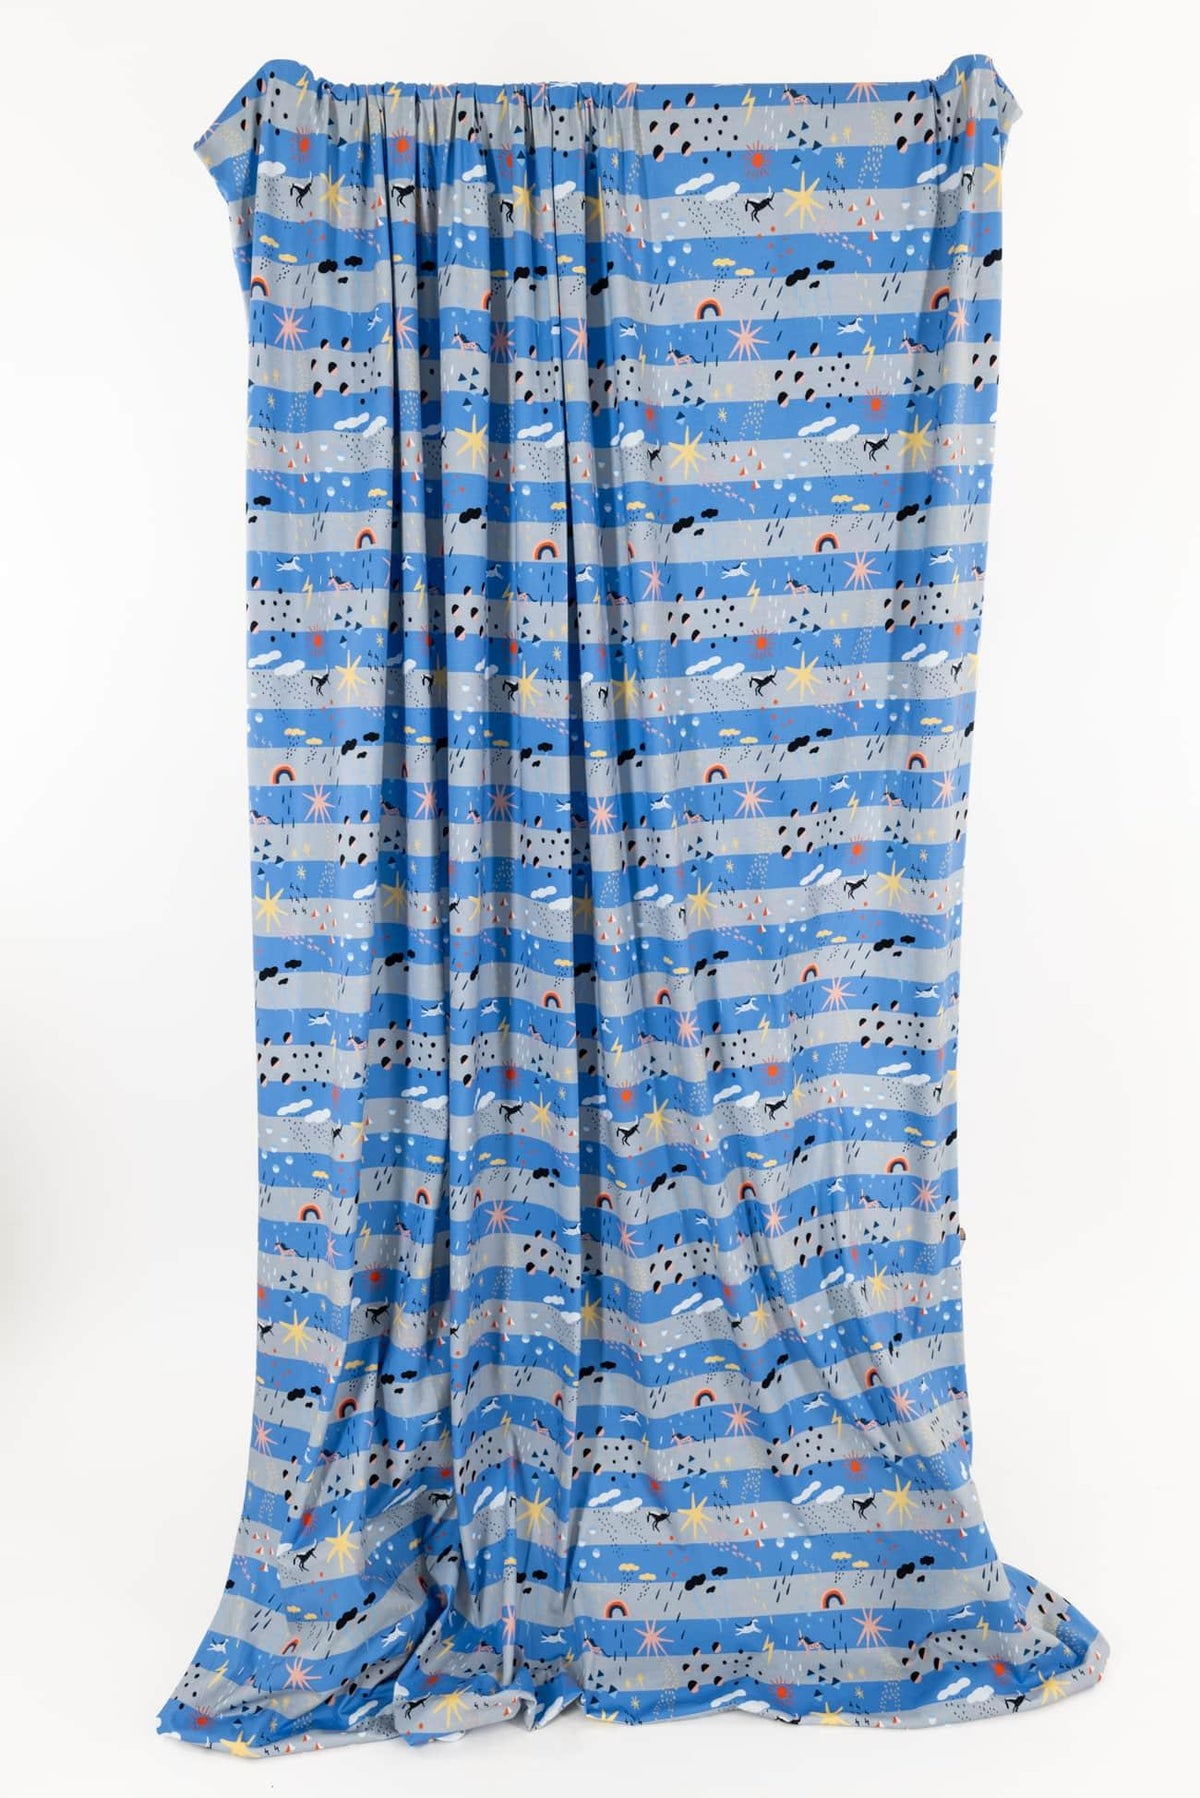 Sacre Bleu Cotton Knit - Marcy Tilton Fabrics